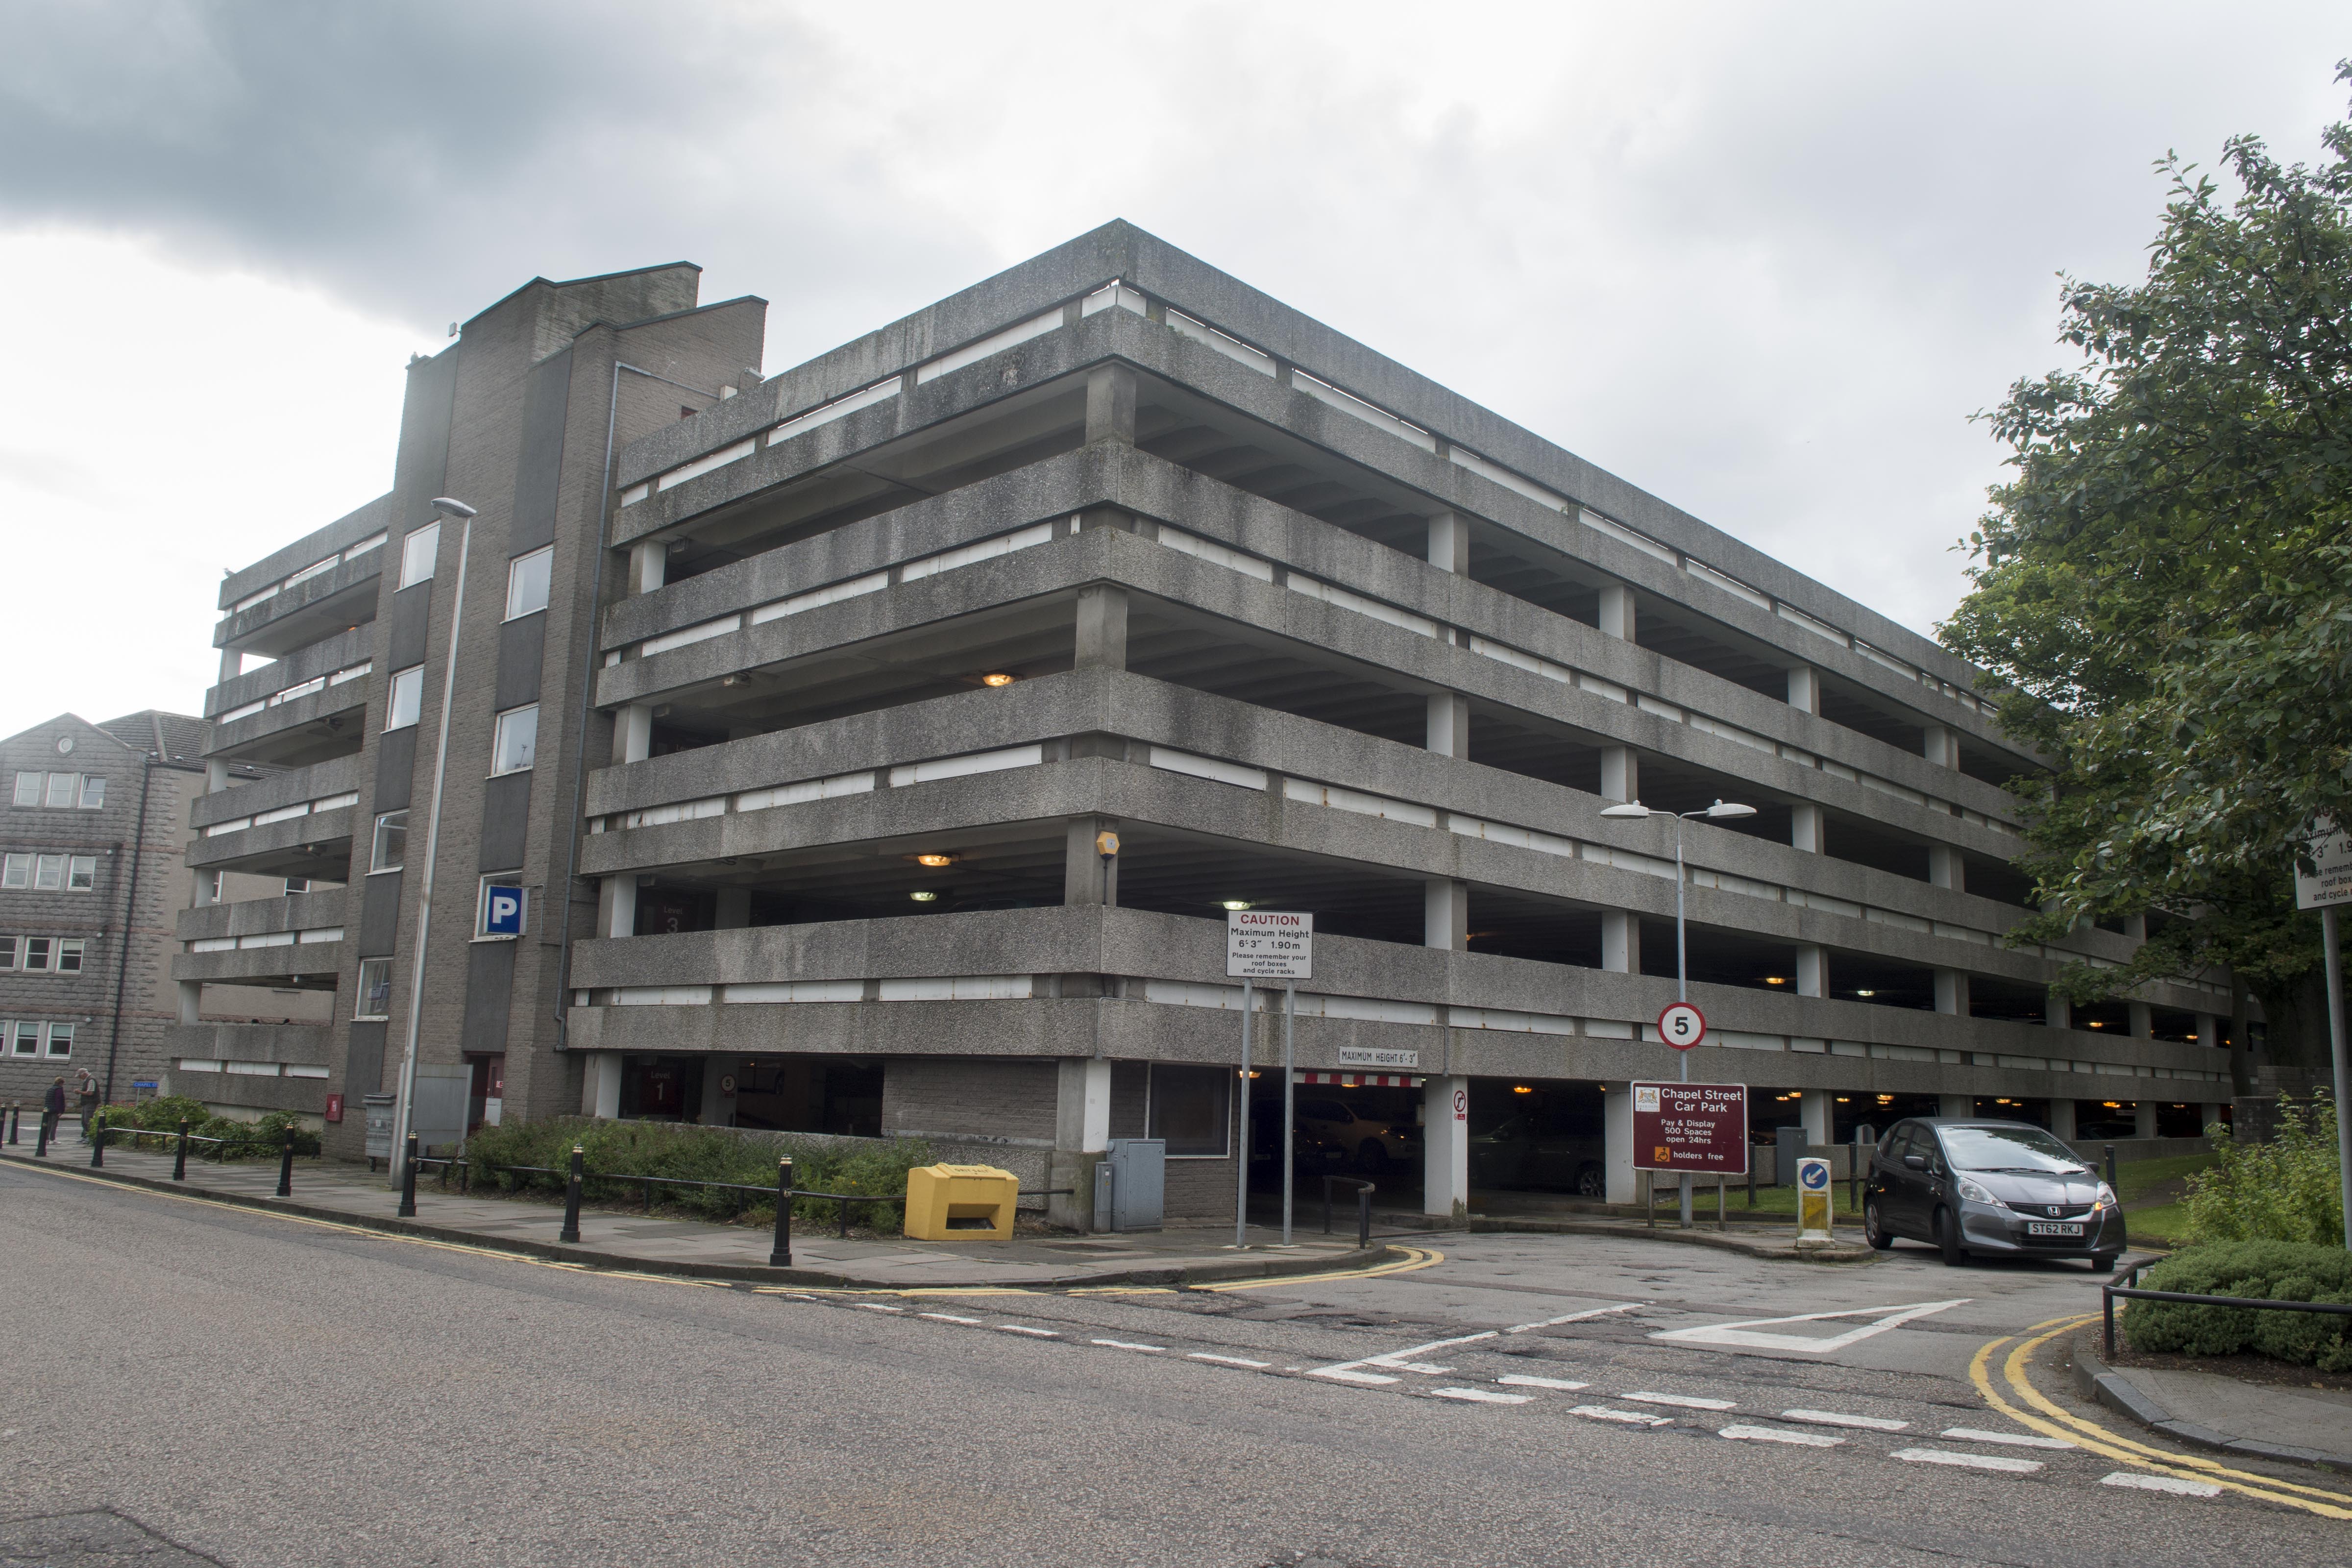 Aberdeen city centre car park set for extensive refurbishment